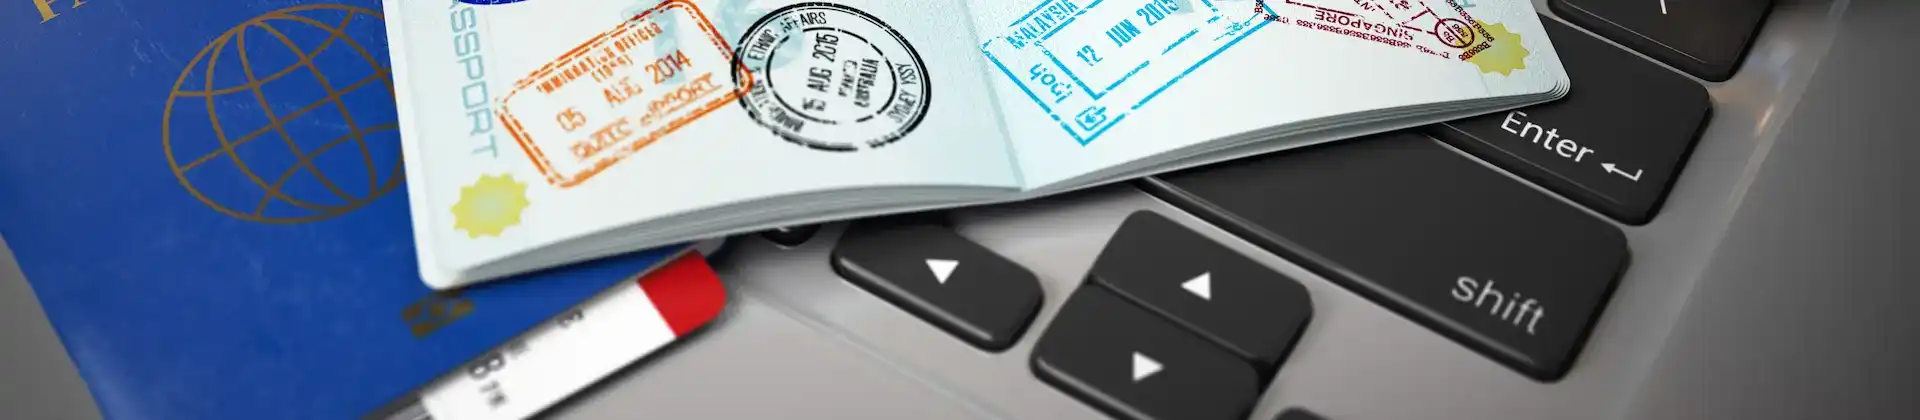 How To Submit a Schengen Visa Application